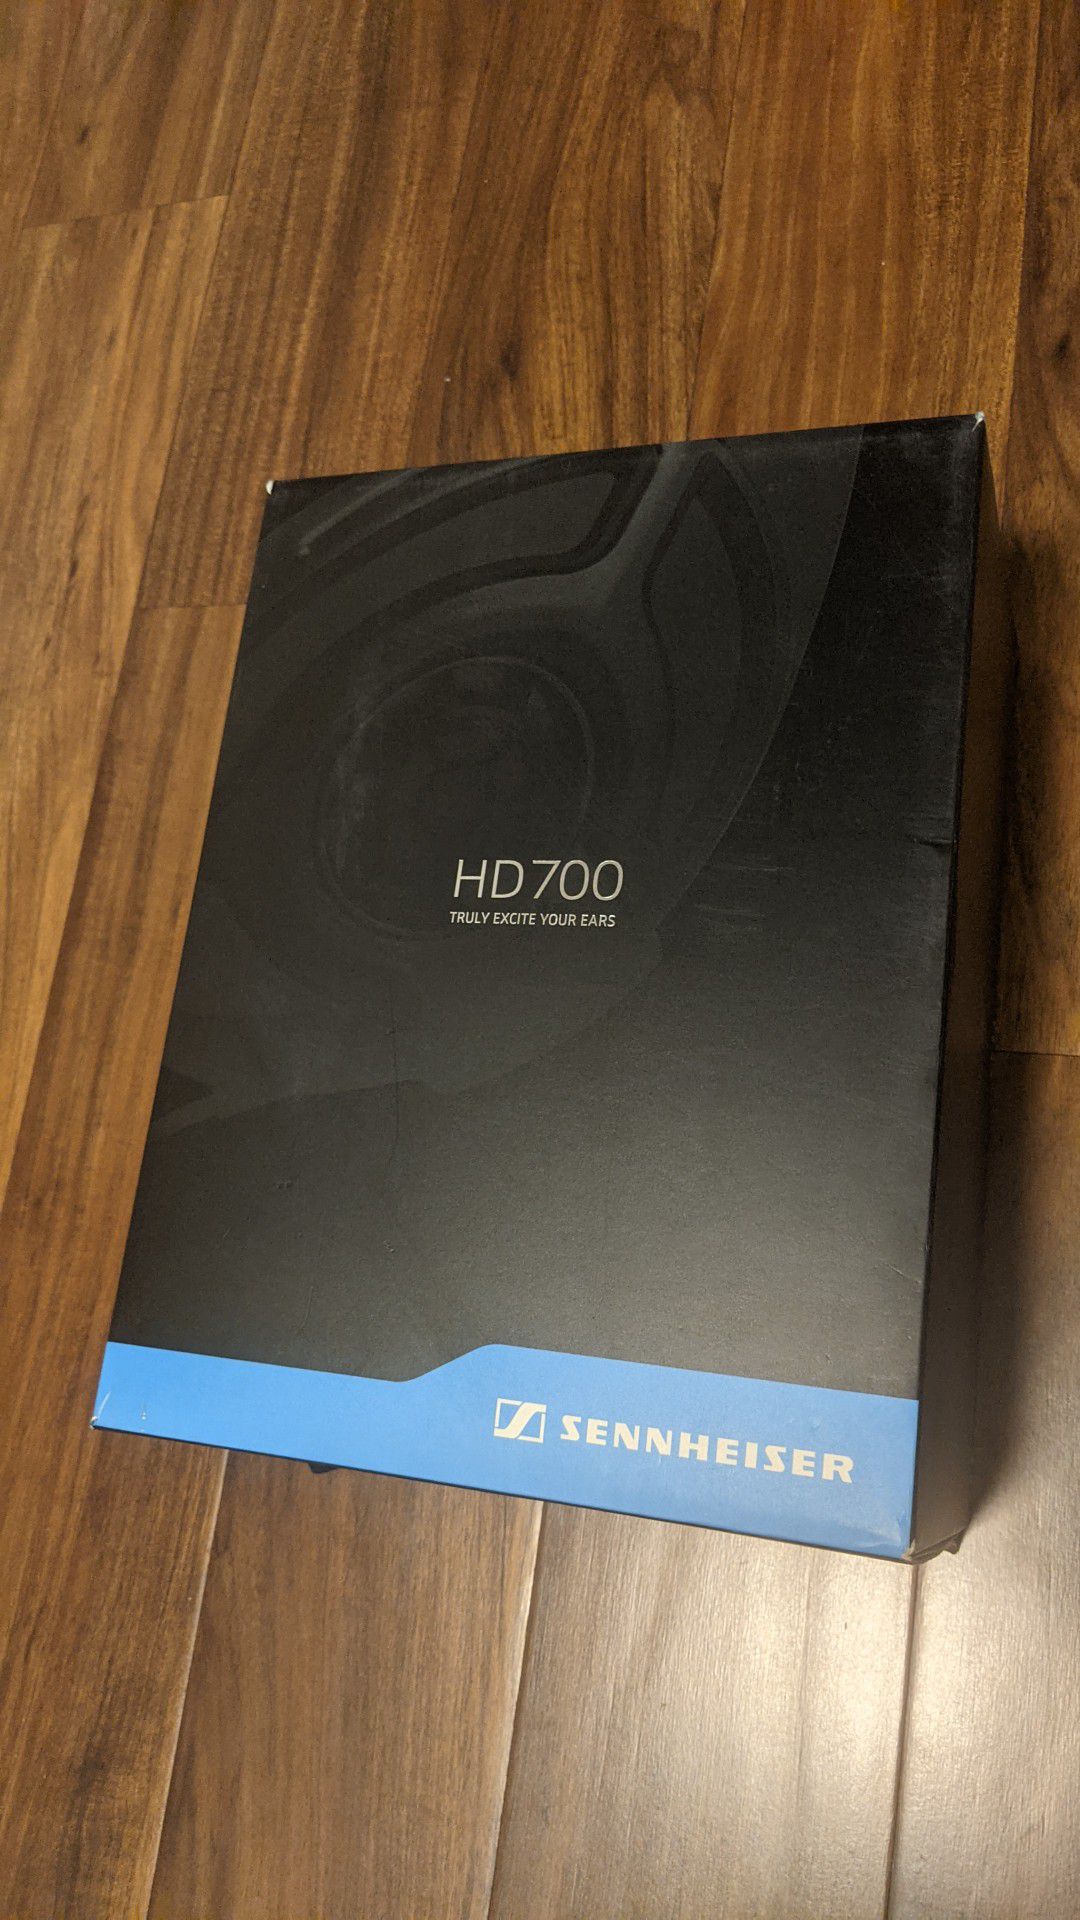 Sennheiser HD700 headphones